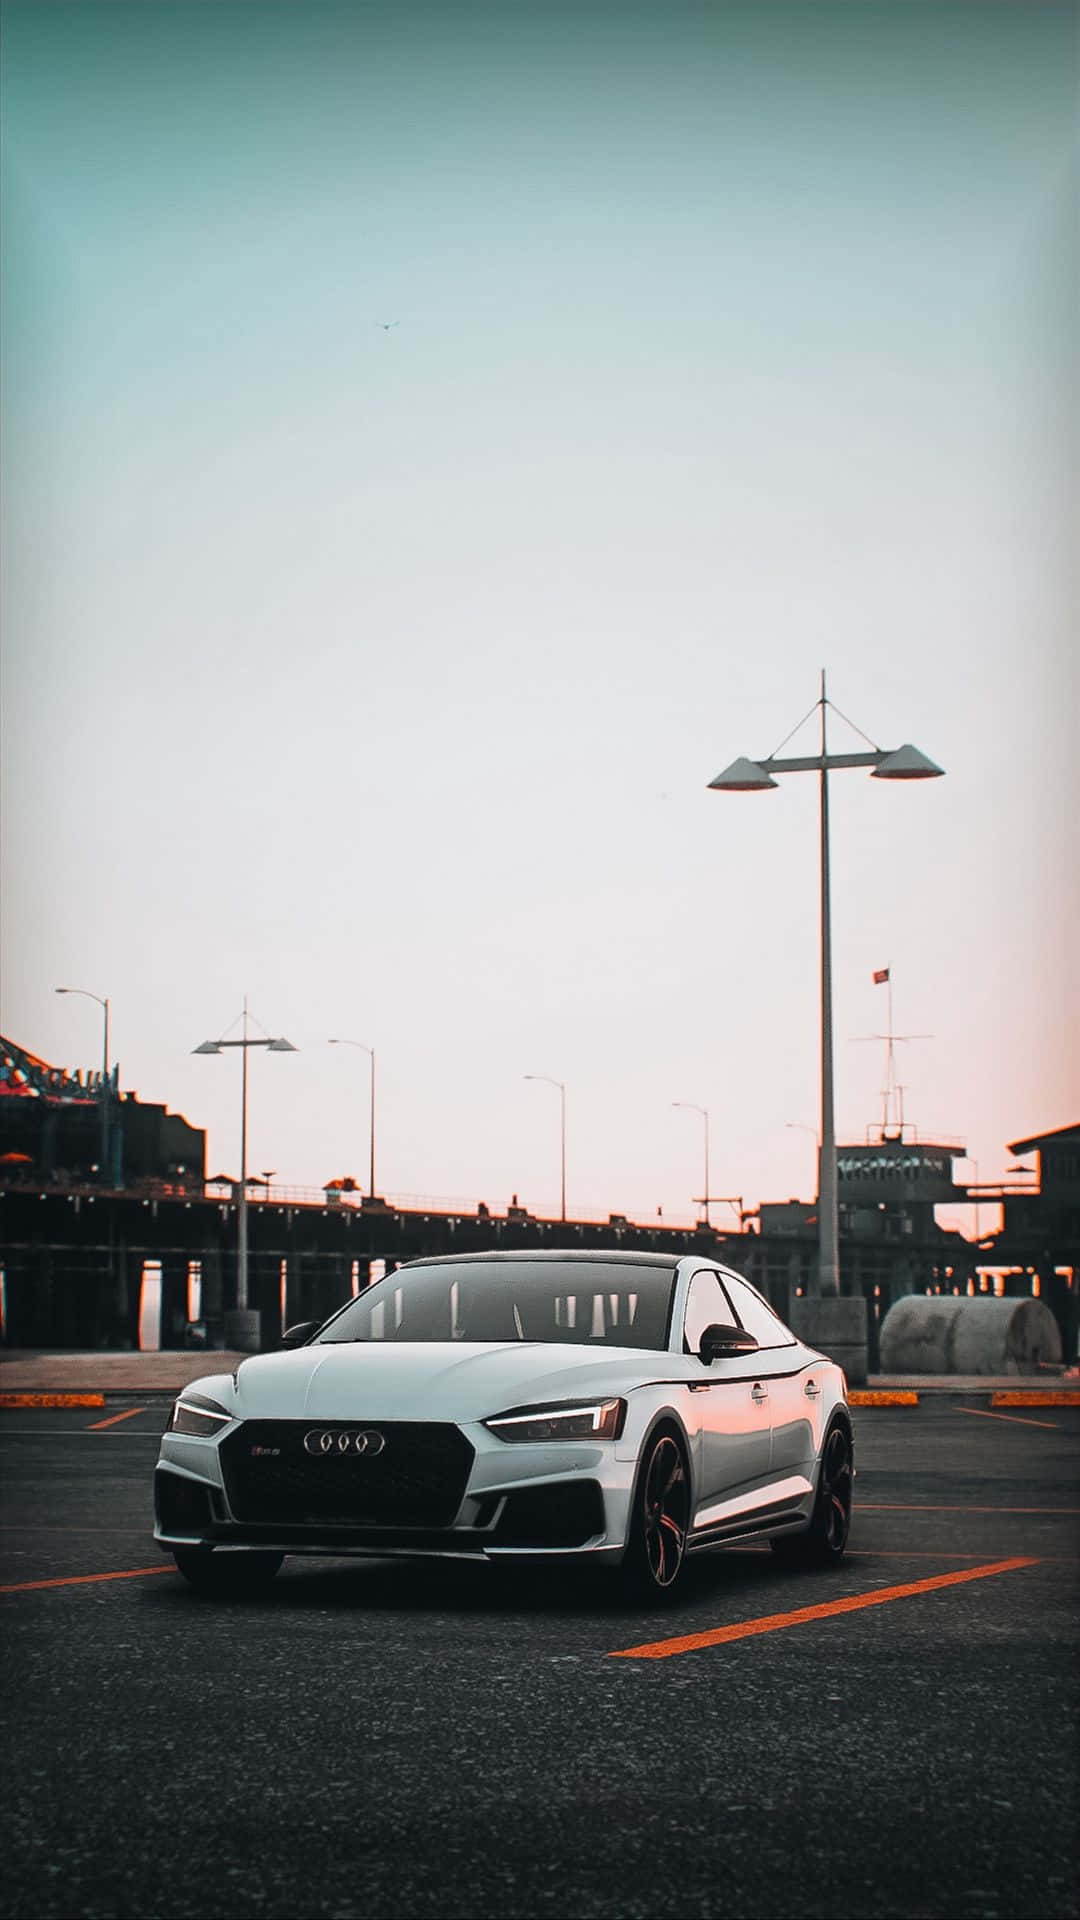 Sleek Audi car in an urban setting